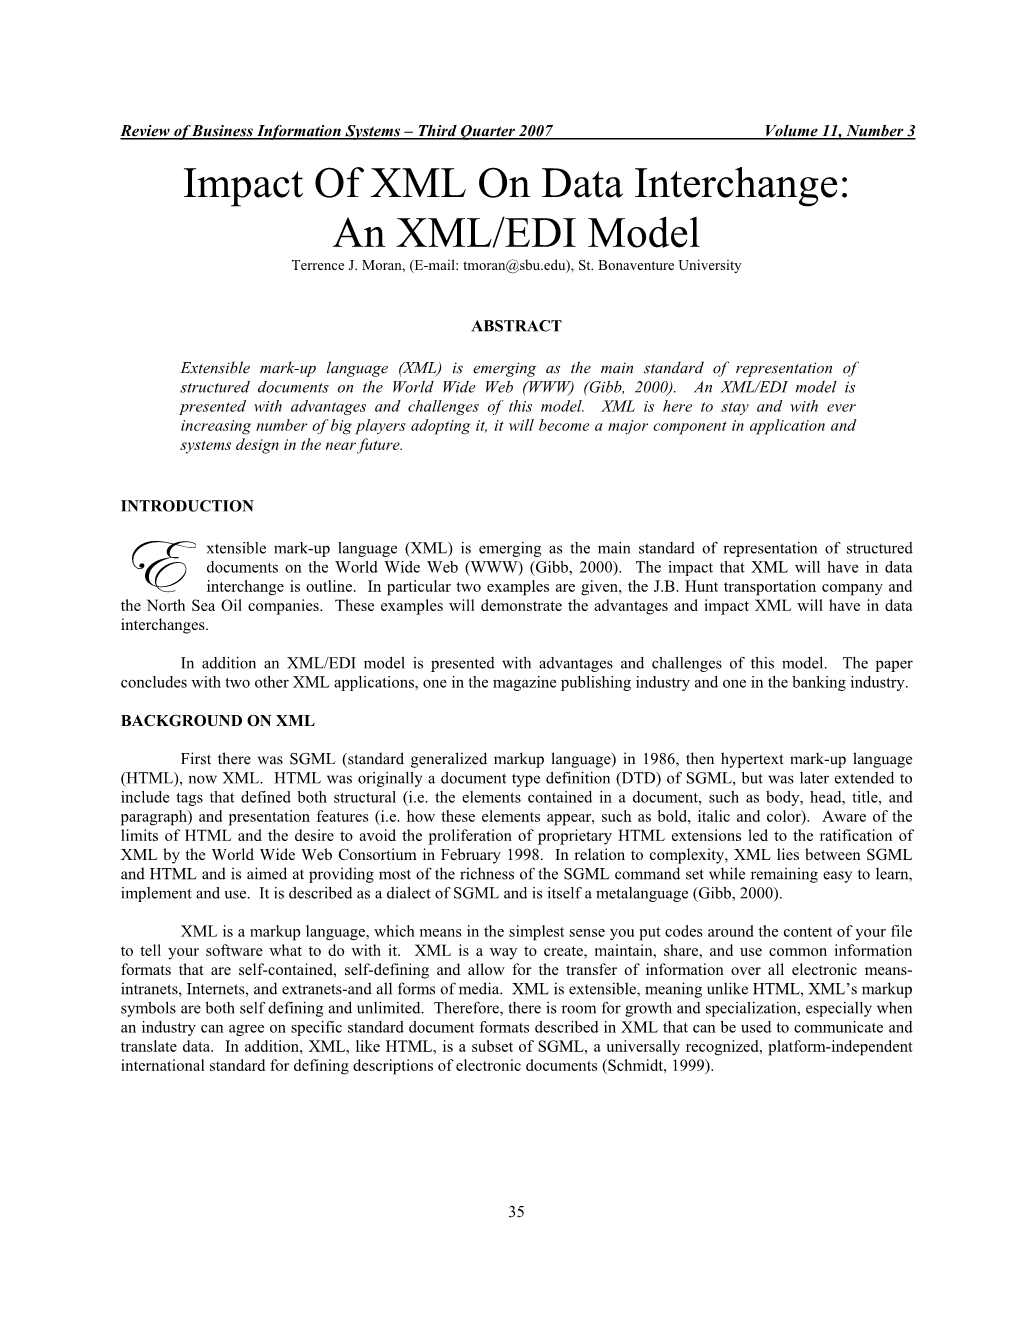 Impact of XML on Data Interchange: an XML/EDI Model Terrence J